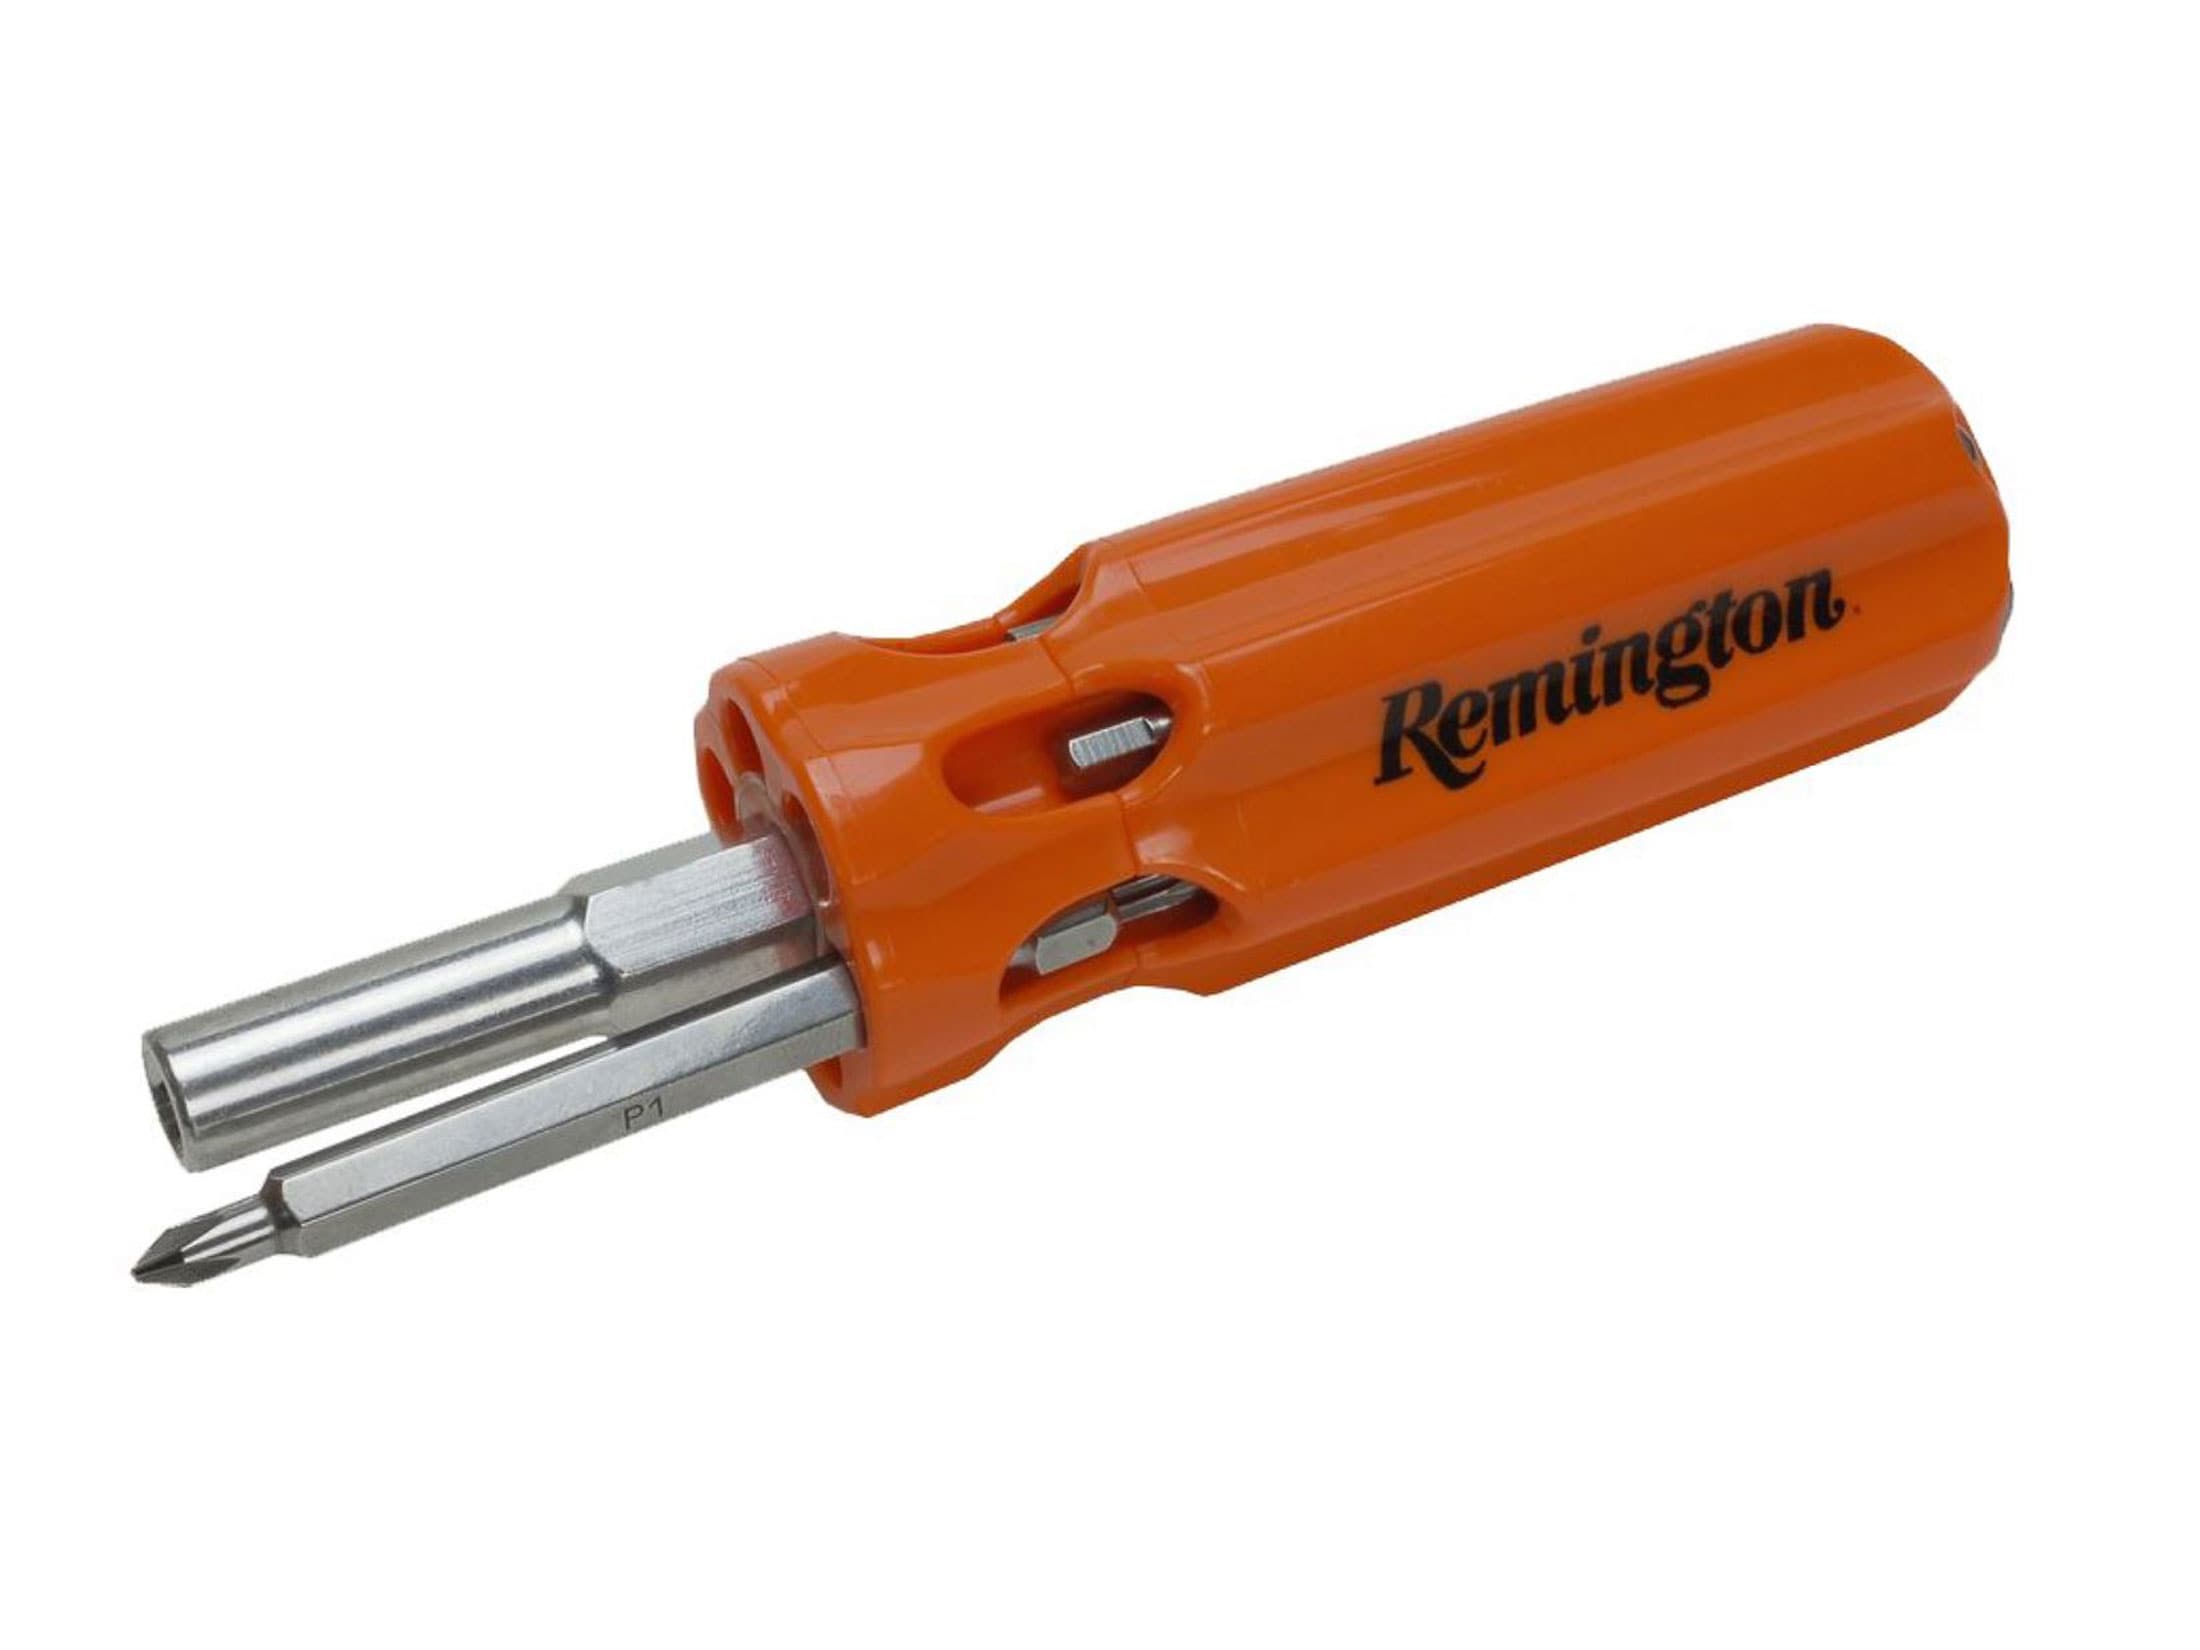 remington model 480 power driver